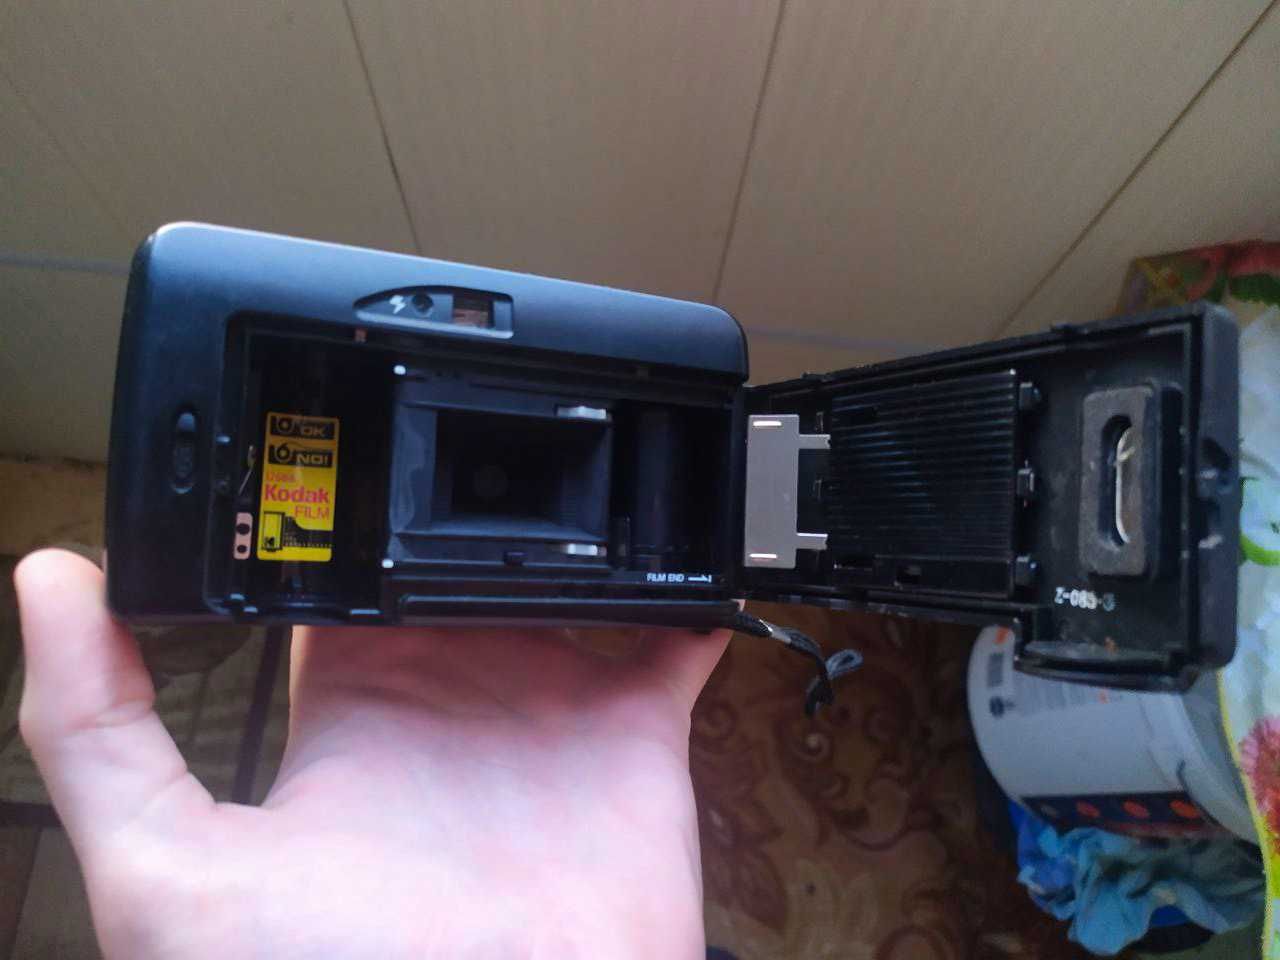 Пленочный фотоаппарат Kodak pro star 222